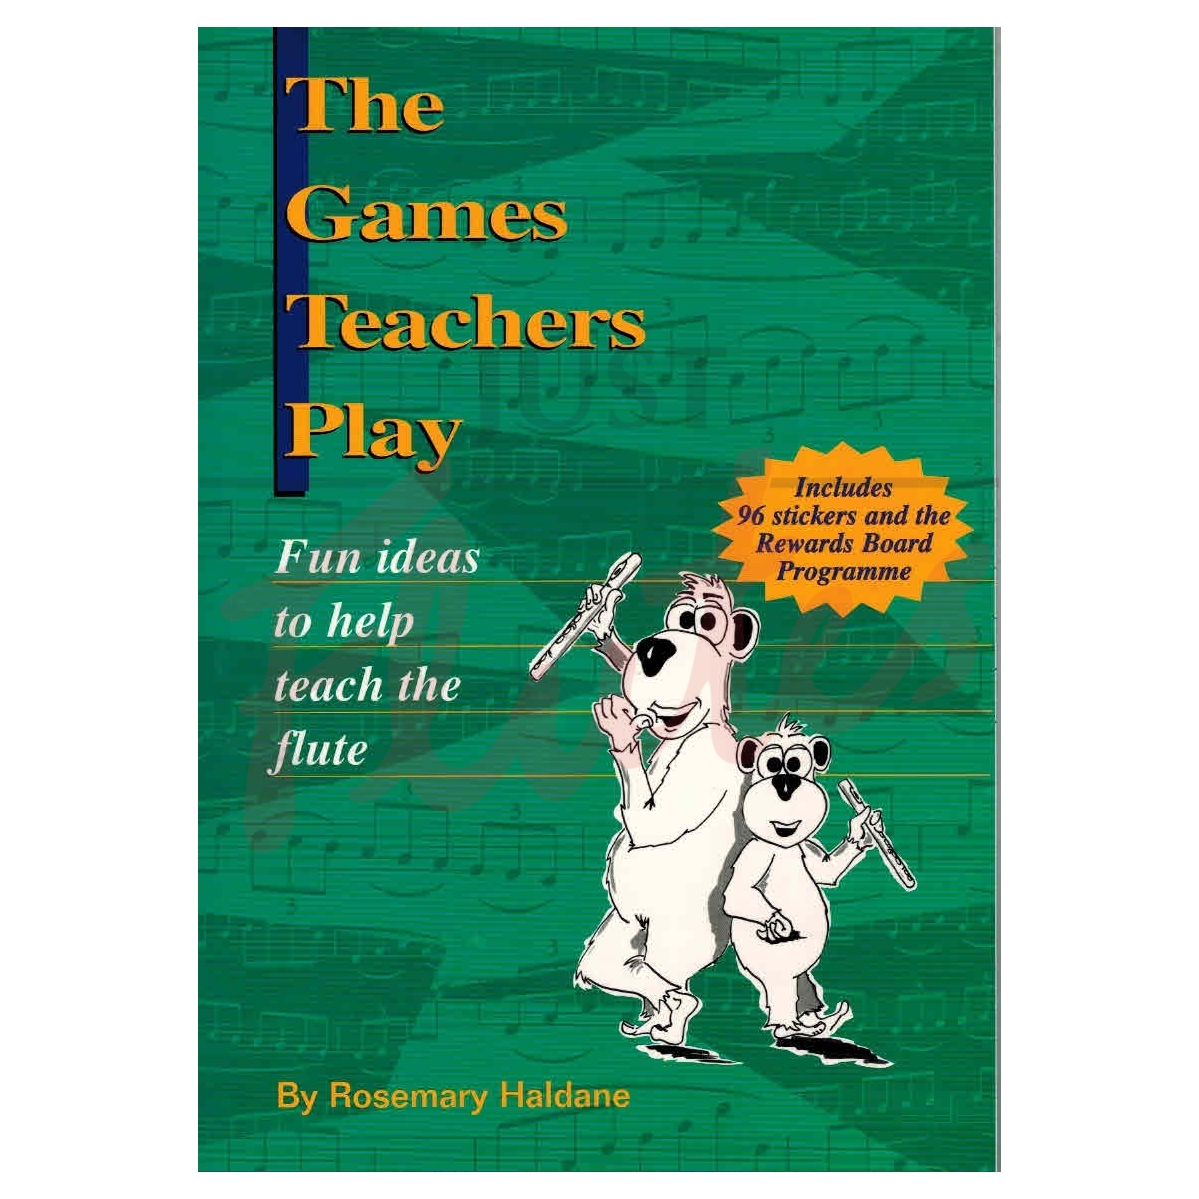 The Games Teachers Play